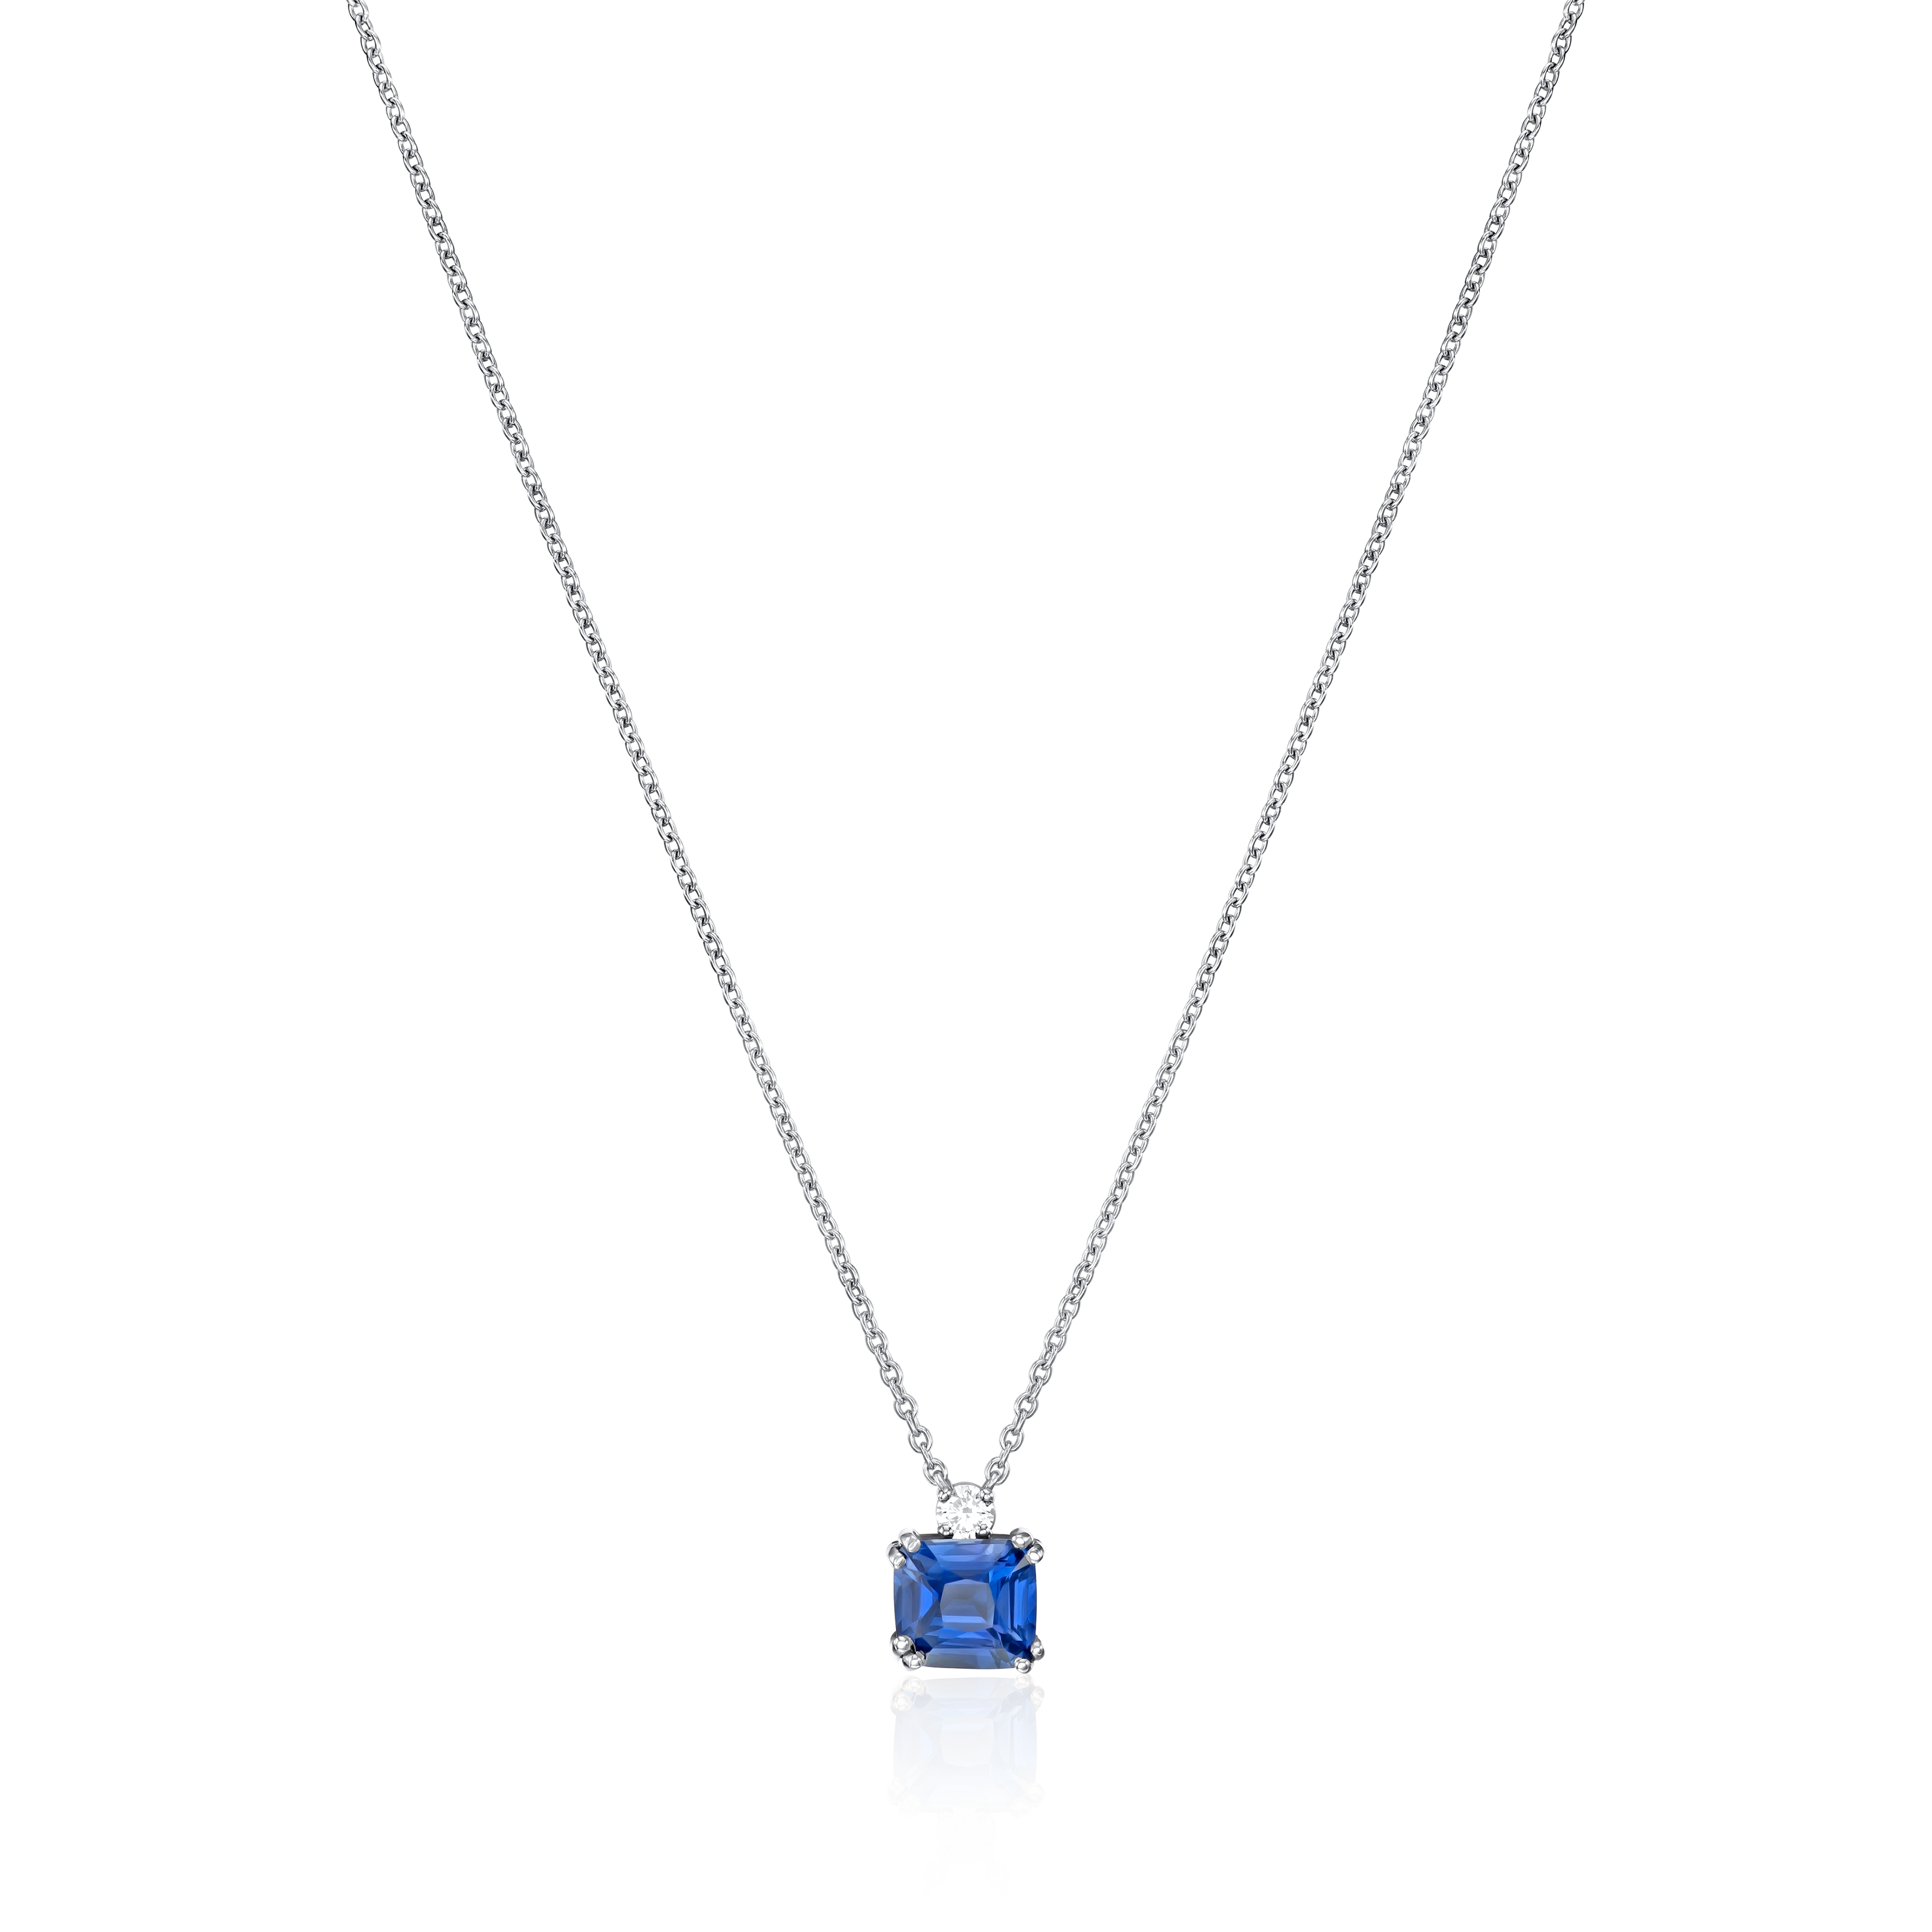 2.02cts Blue Sapphire and Diamond Pendant